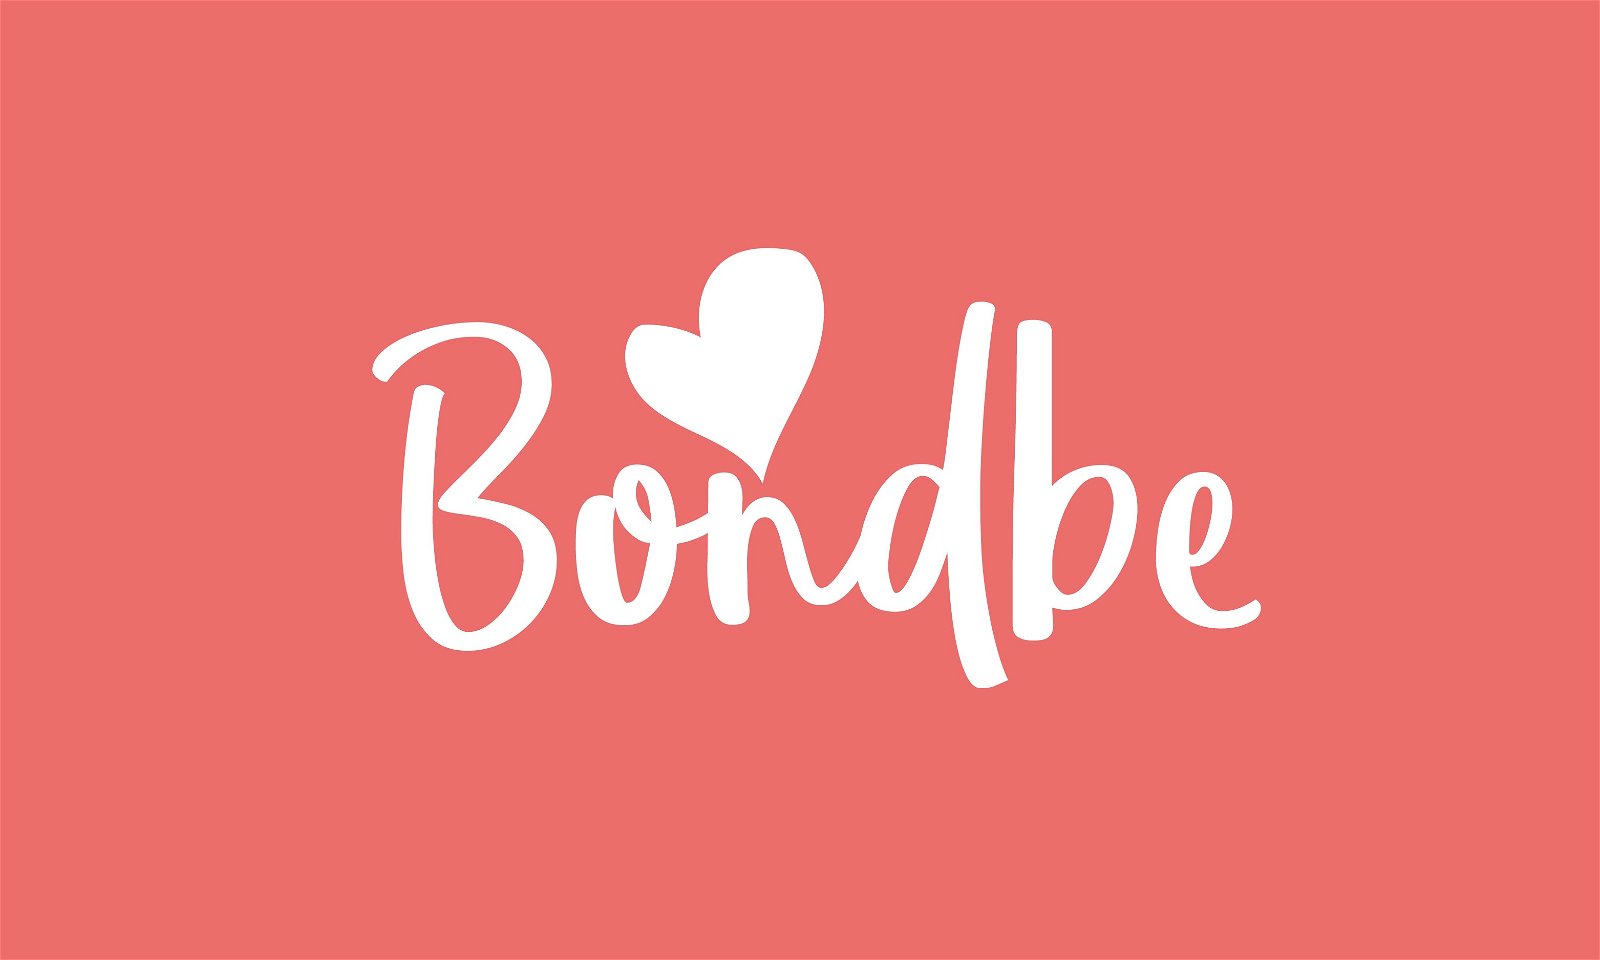 Bondbe.com - Creative brandable domain for sale